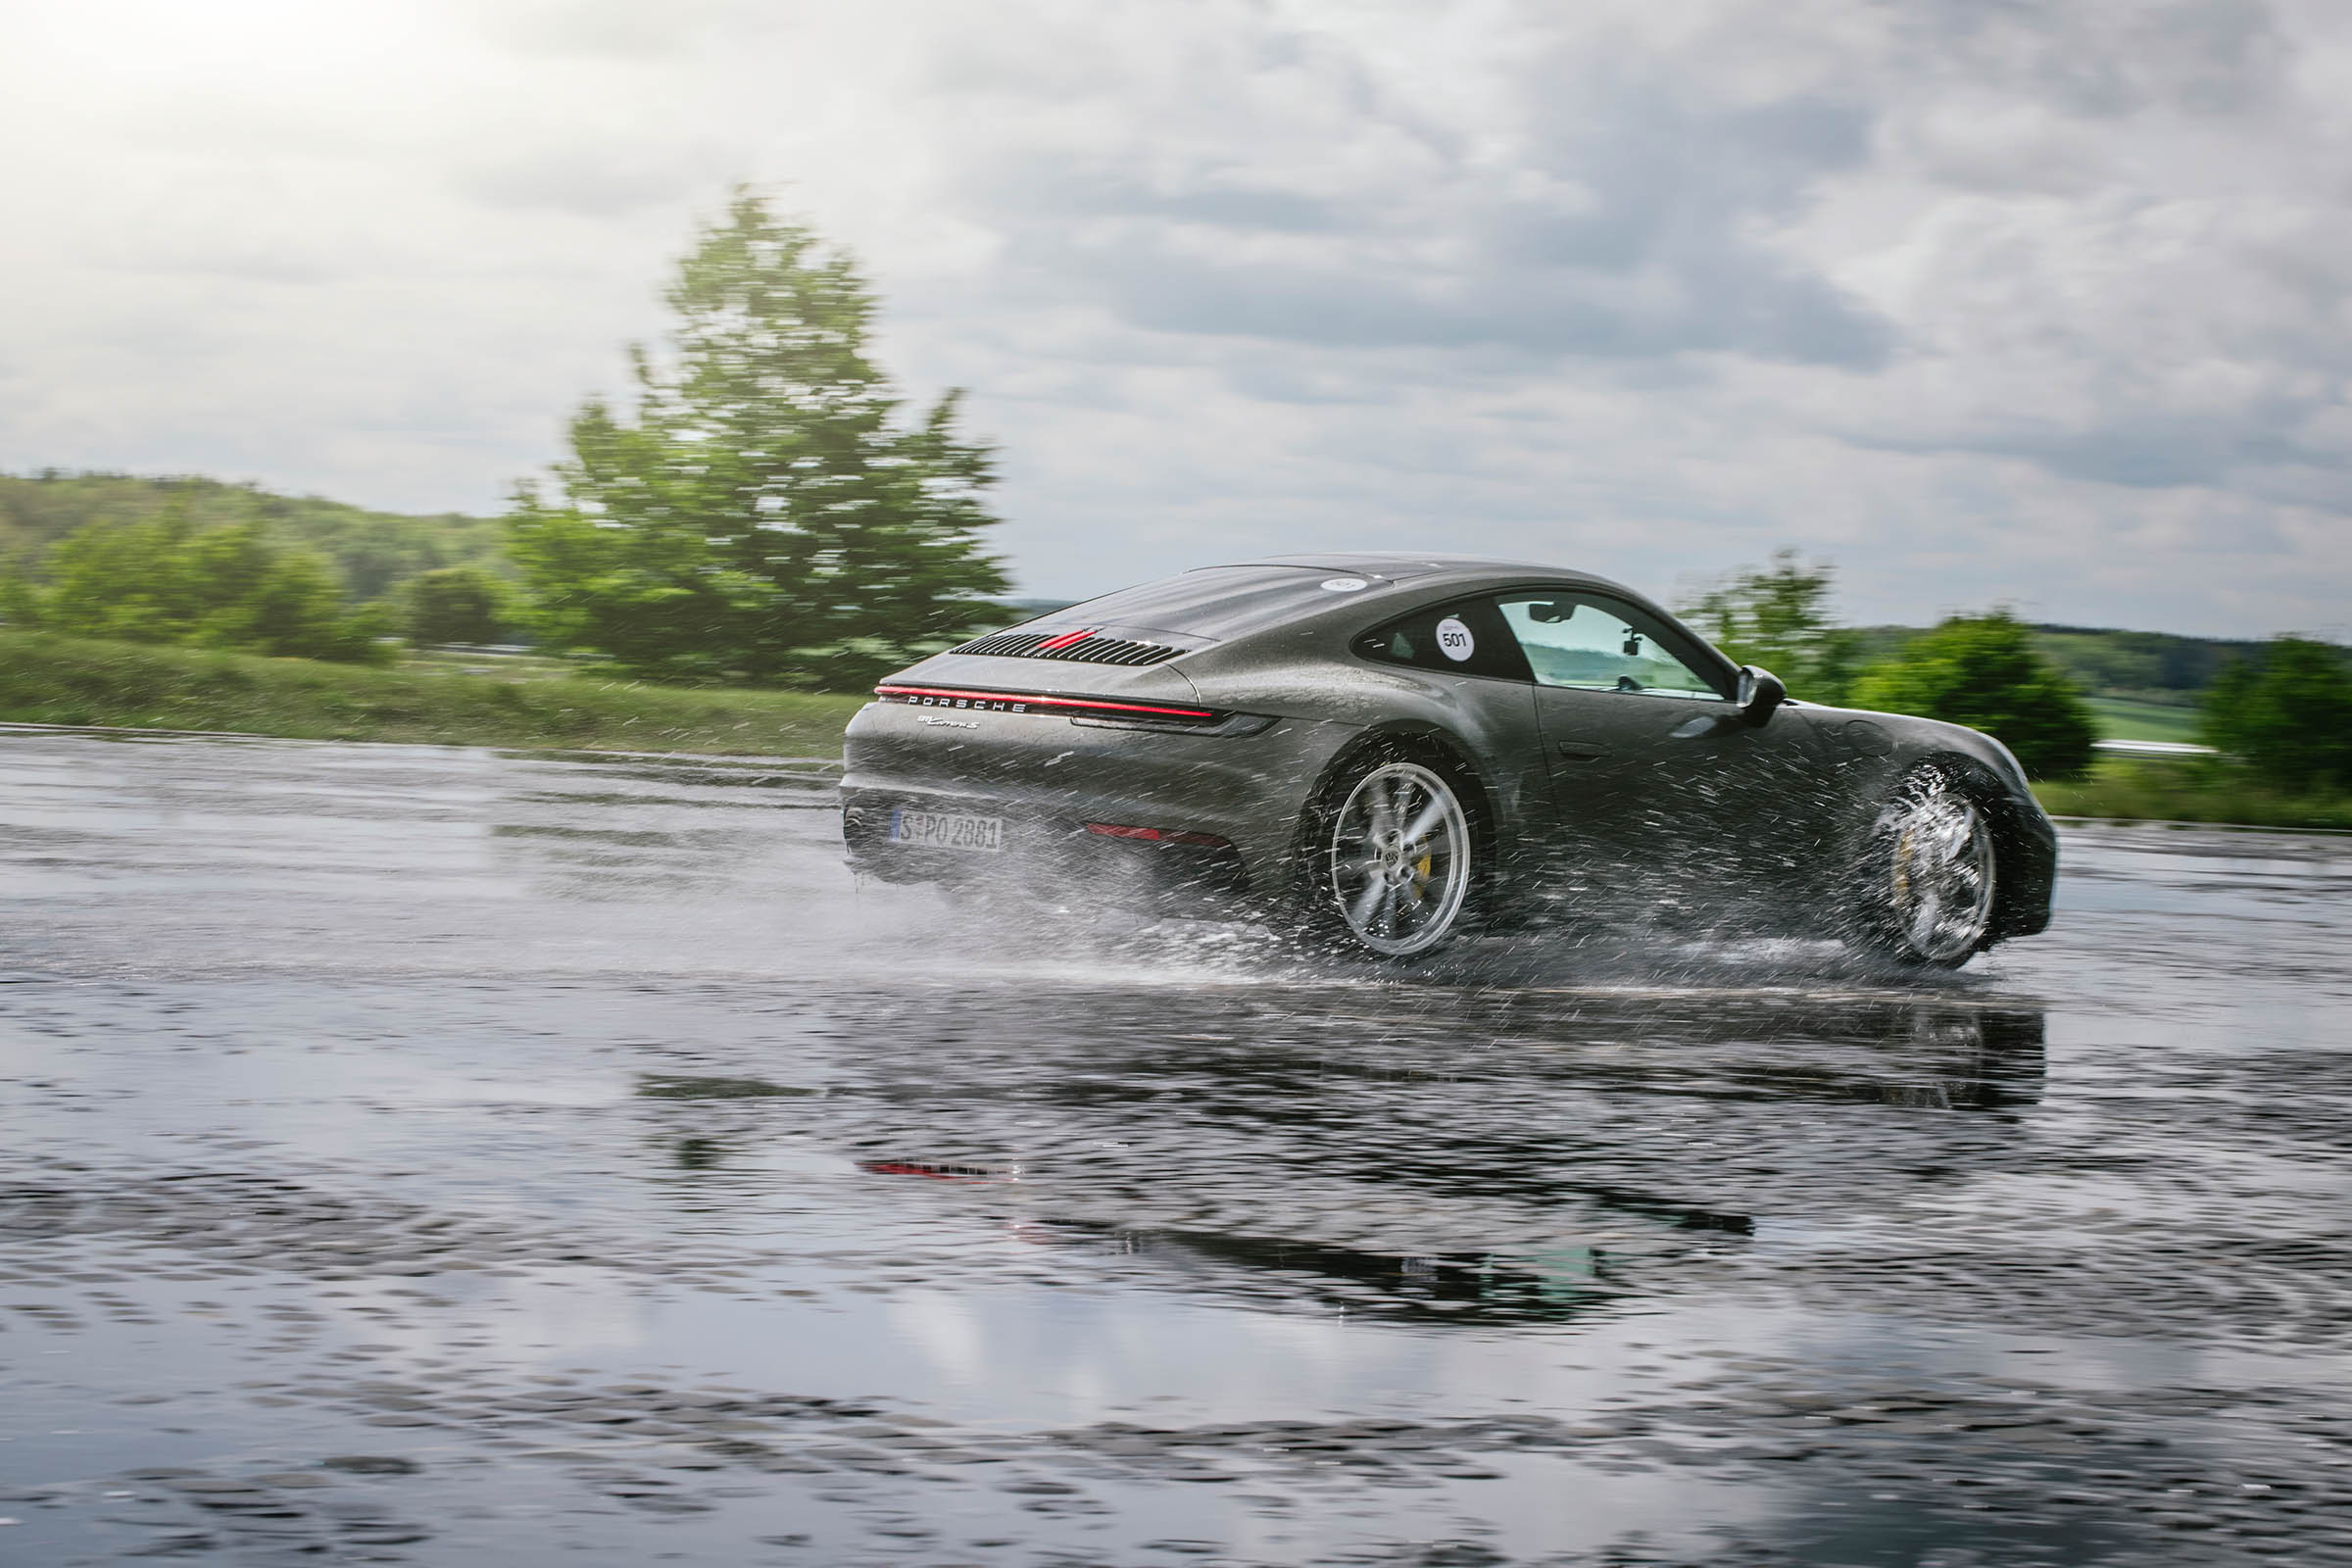 Green Porsche 911 splashing through wet handling circuit at speed